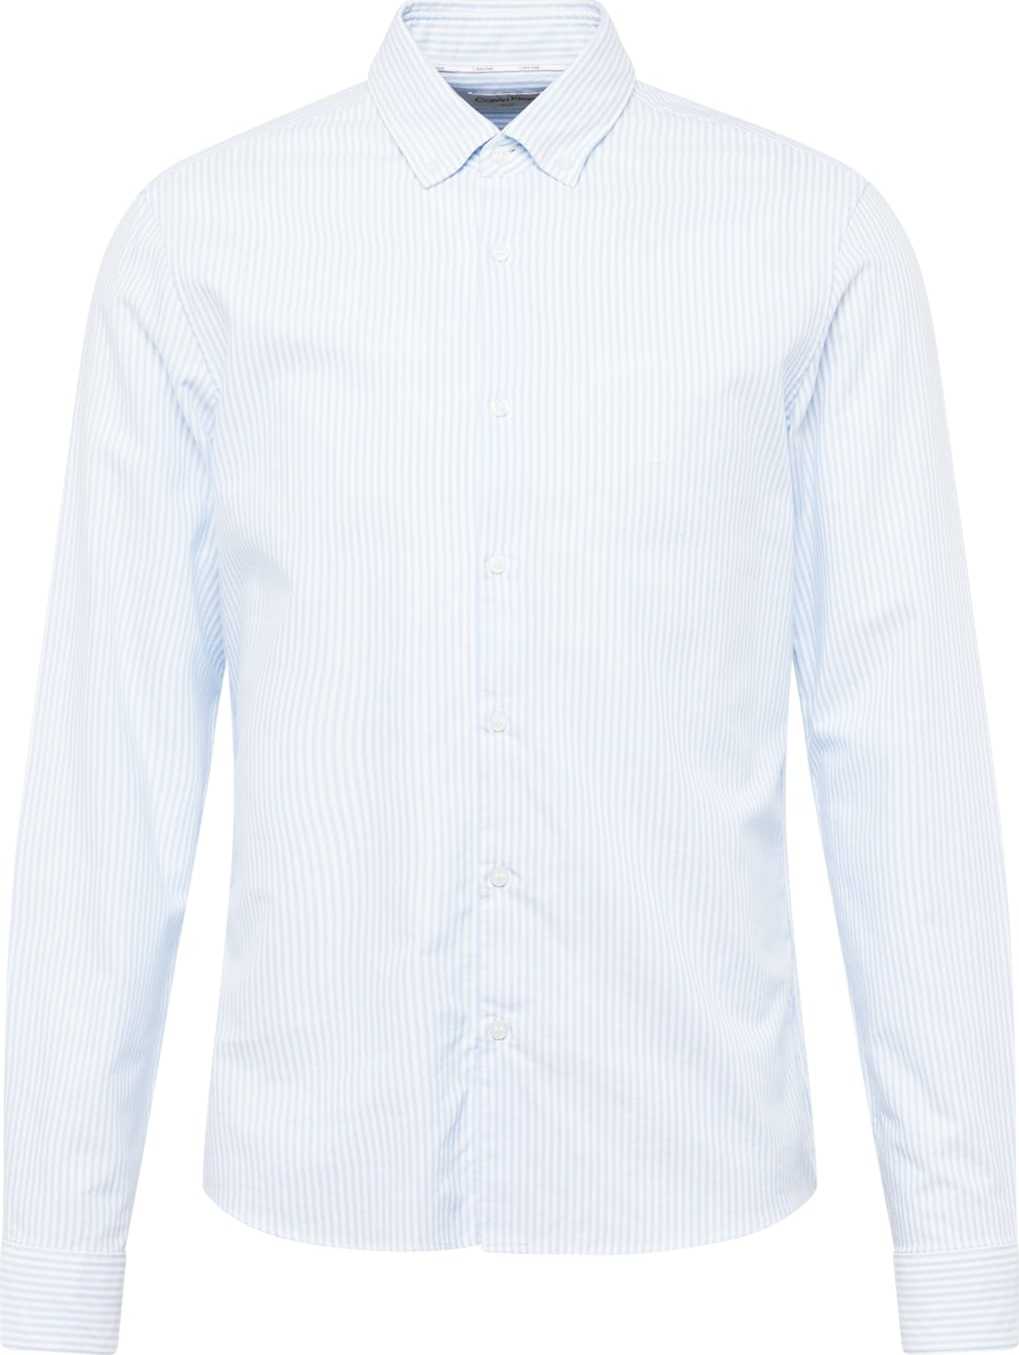 Společenská košile Calvin Klein světlemodrá / bílá